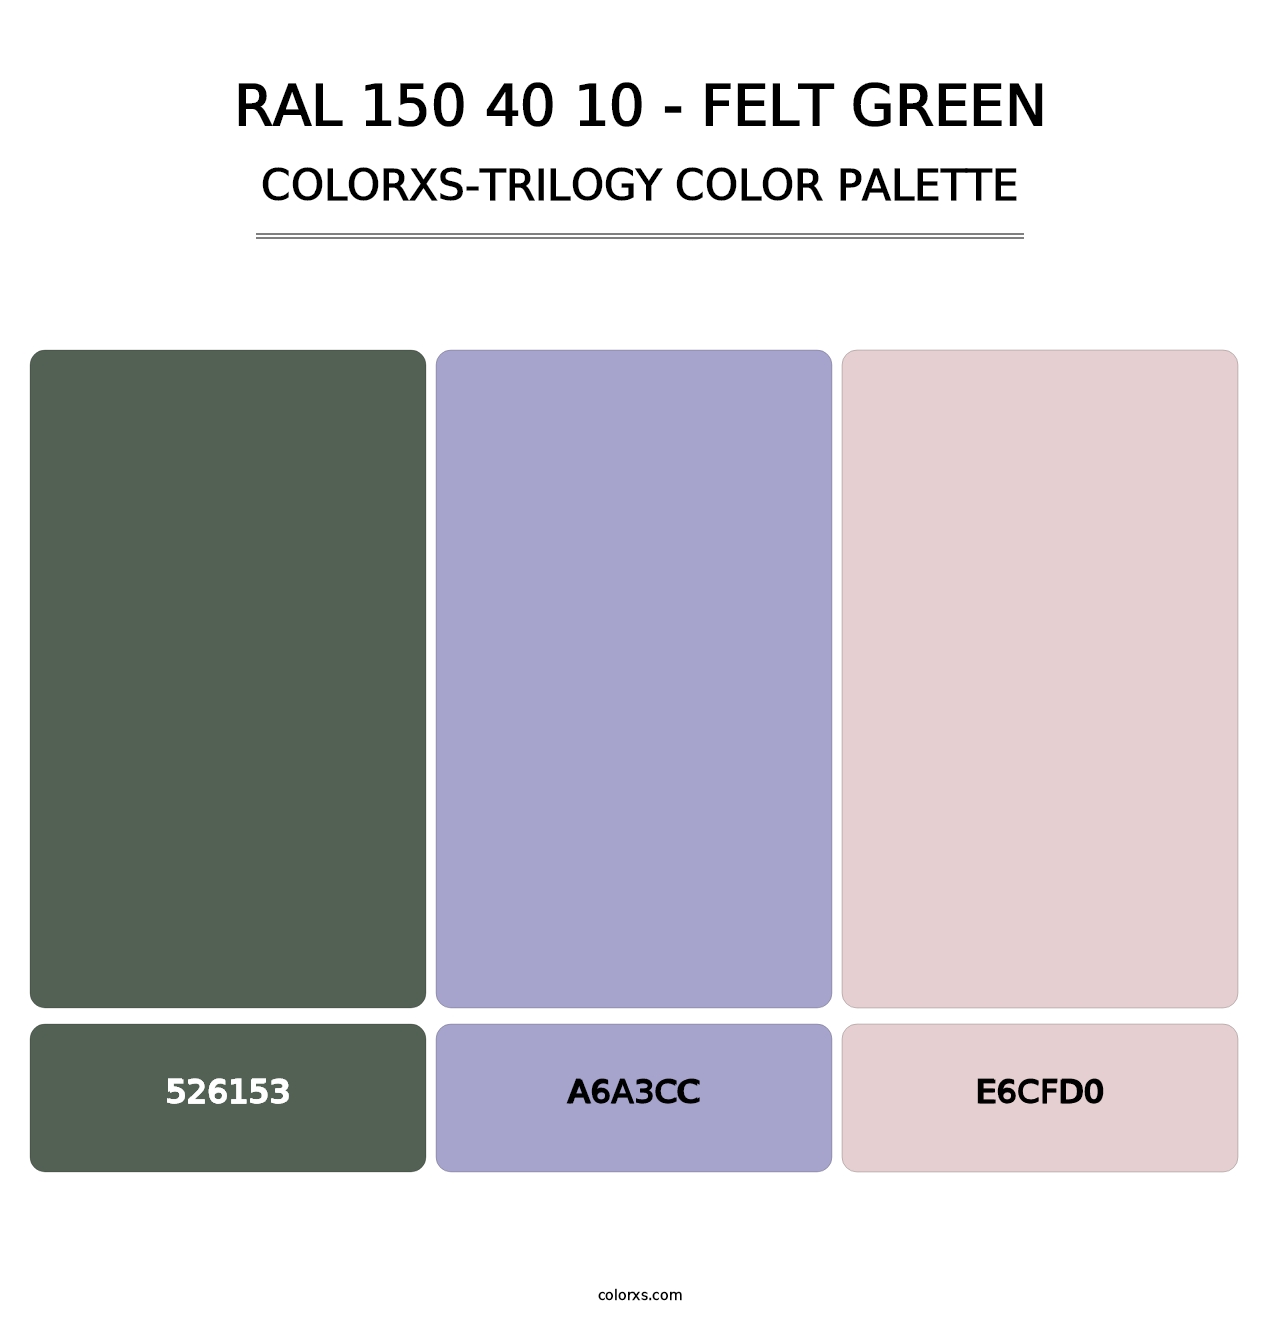 RAL 150 40 10 - Felt Green - Colorxs Trilogy Palette